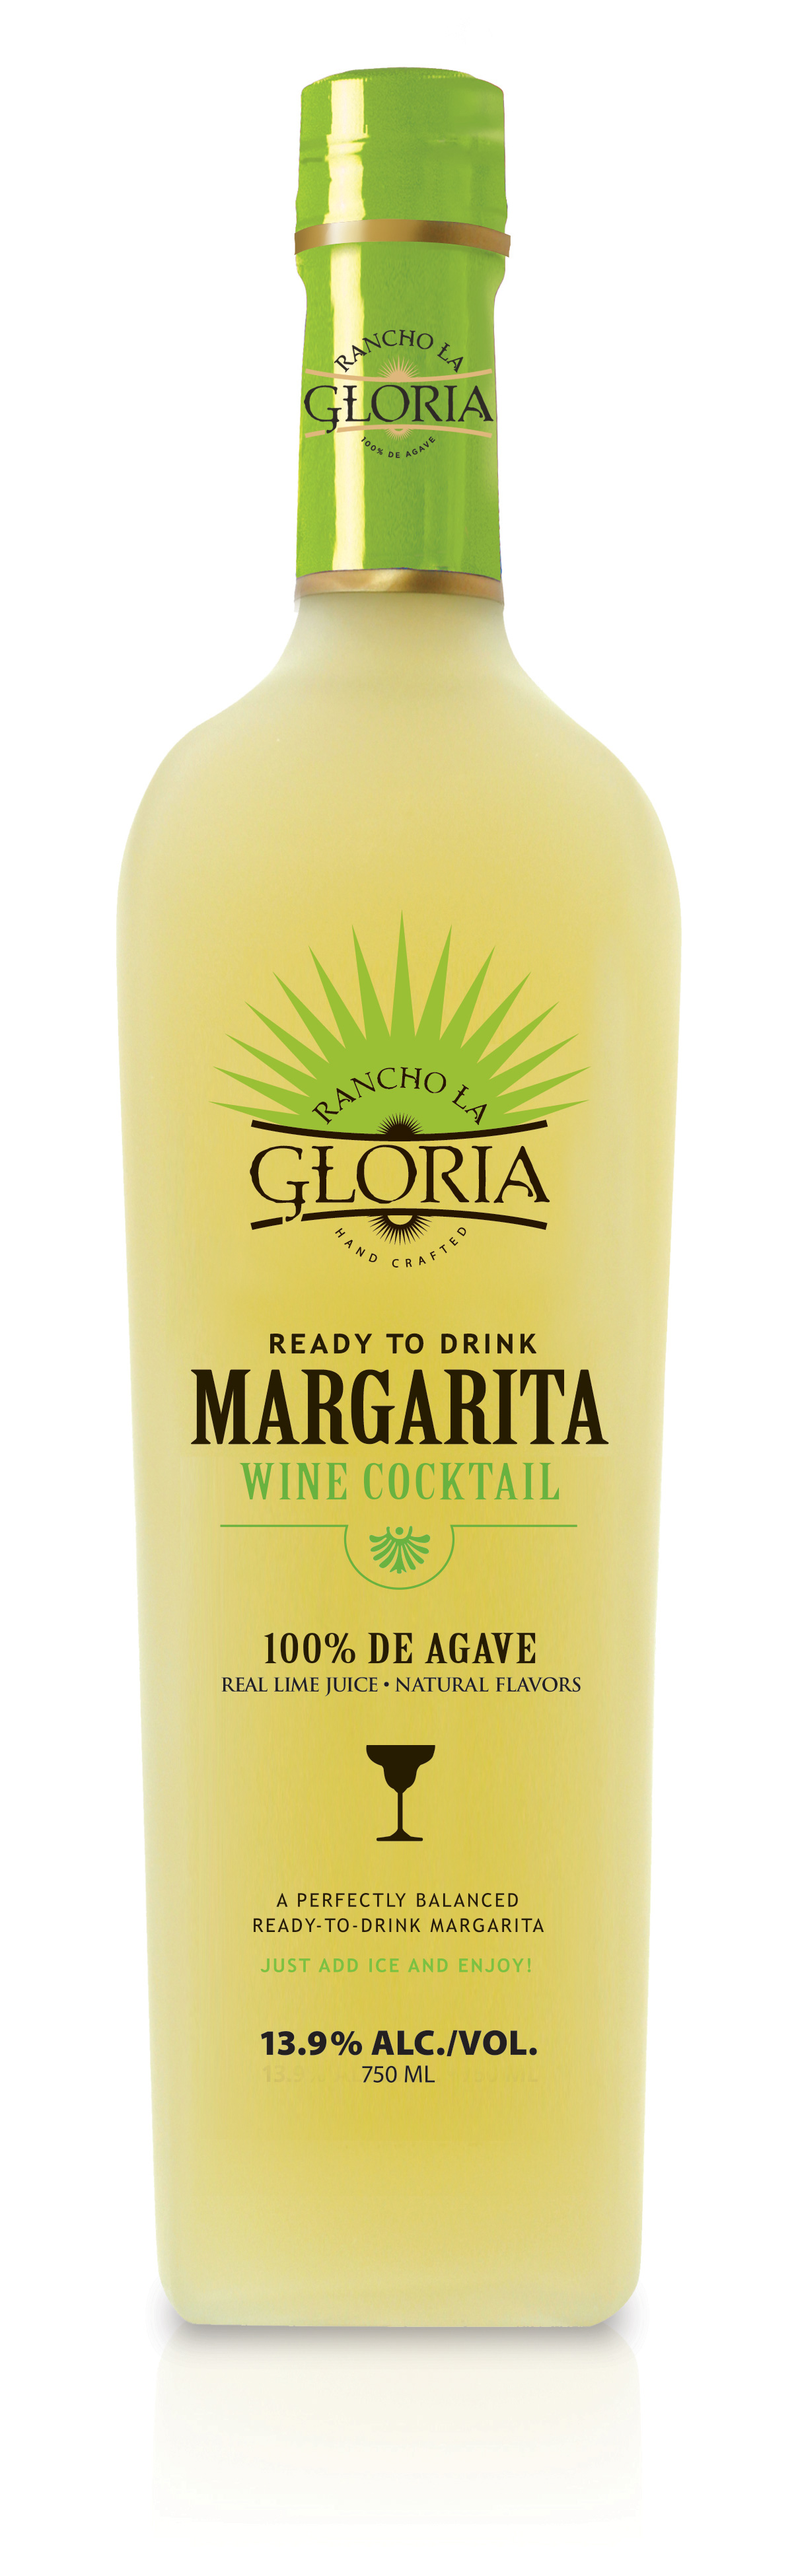 gloria margarita drink